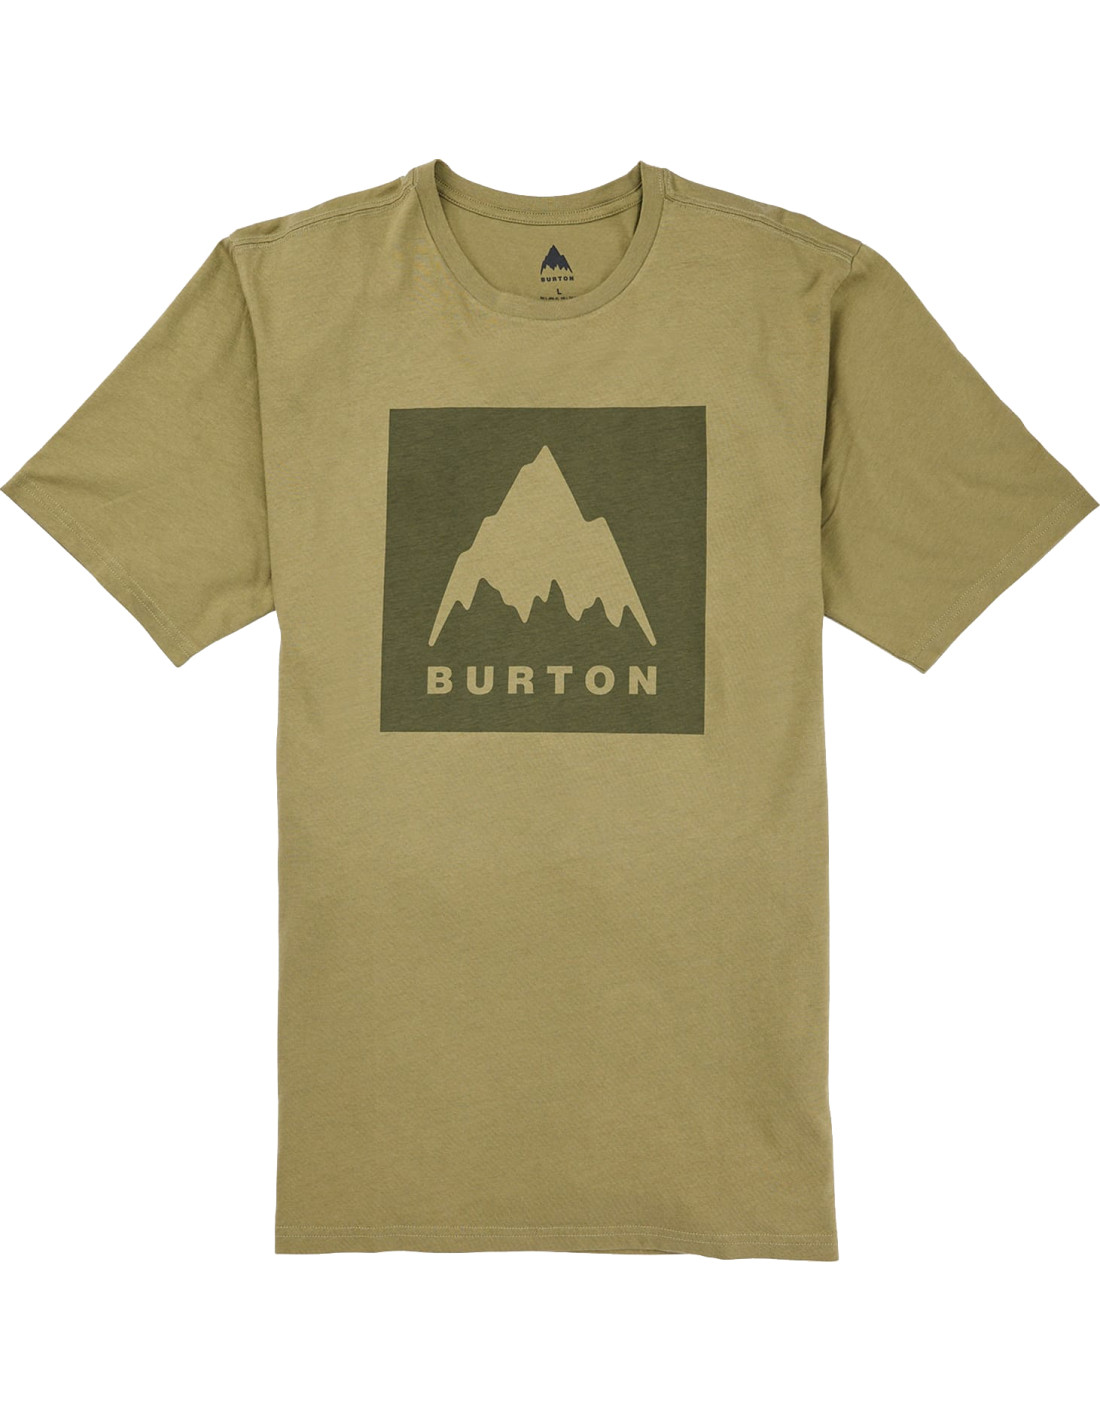 BURTON CLASSIC MOUNTAIN HIGH SHORT SLEEVE T-SHIRT